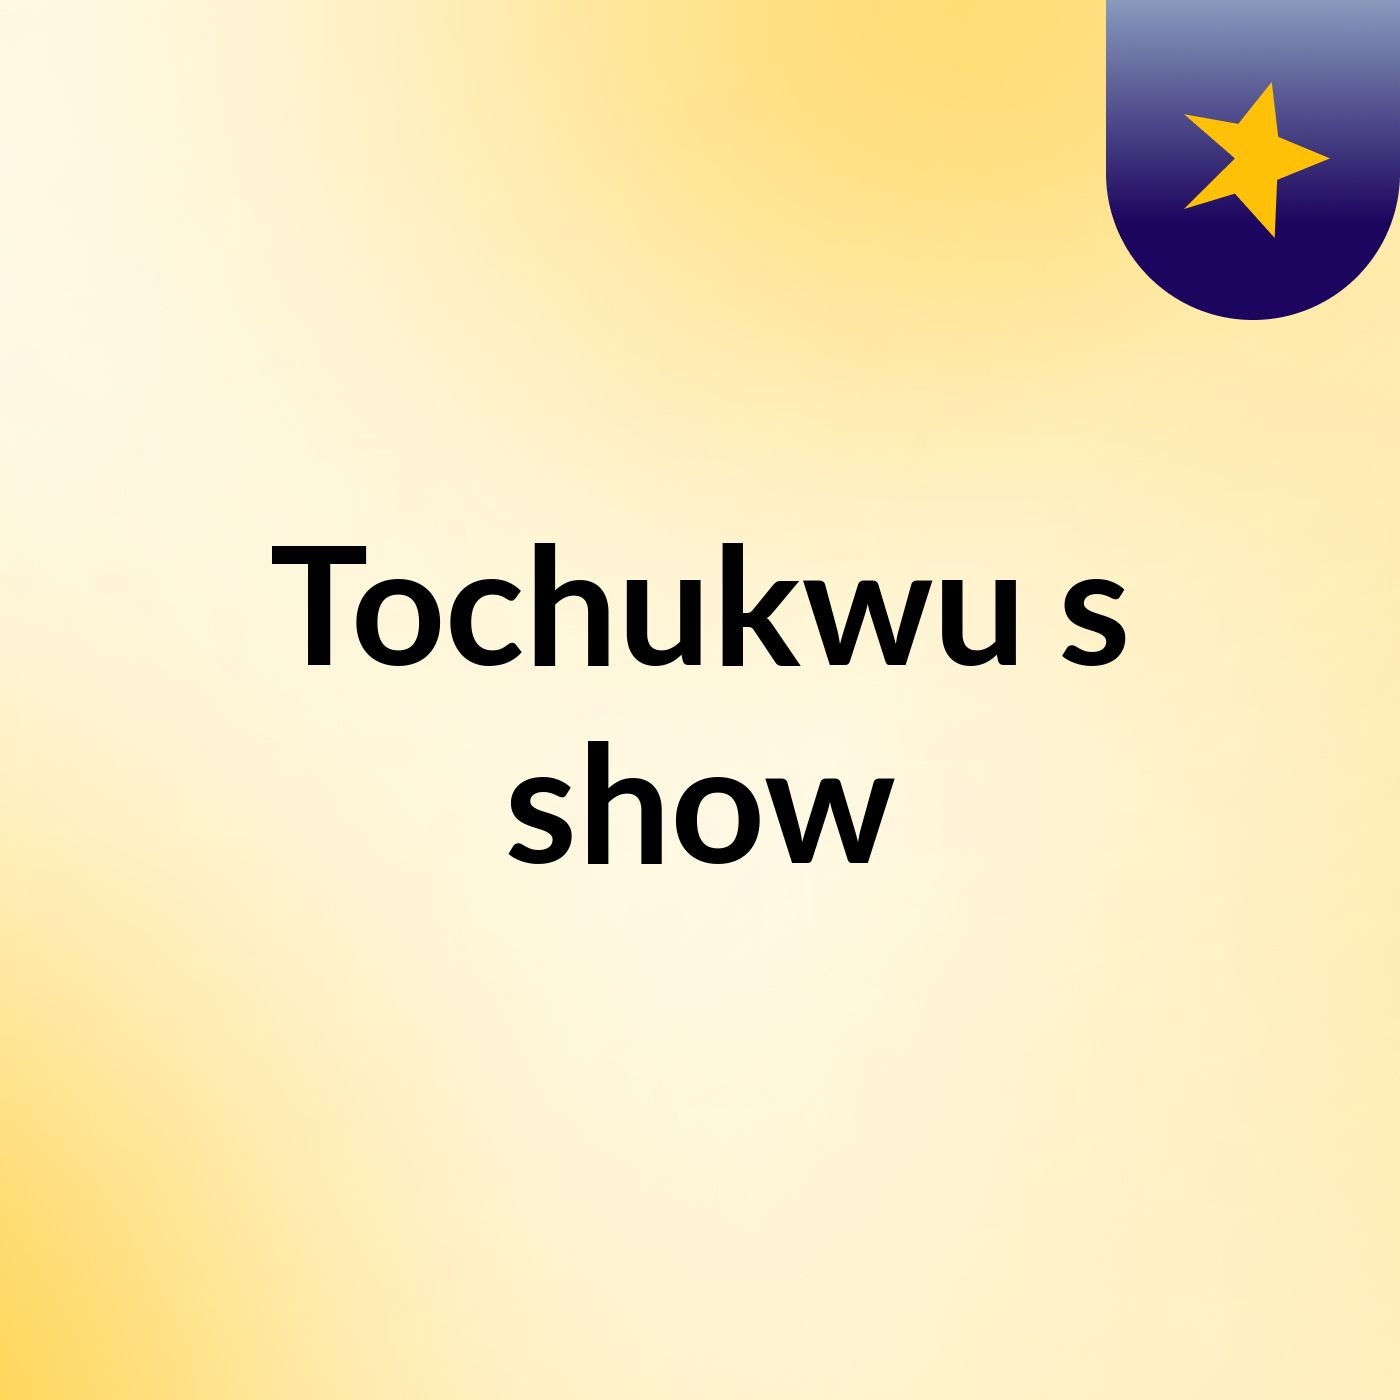 Tochukwu's show